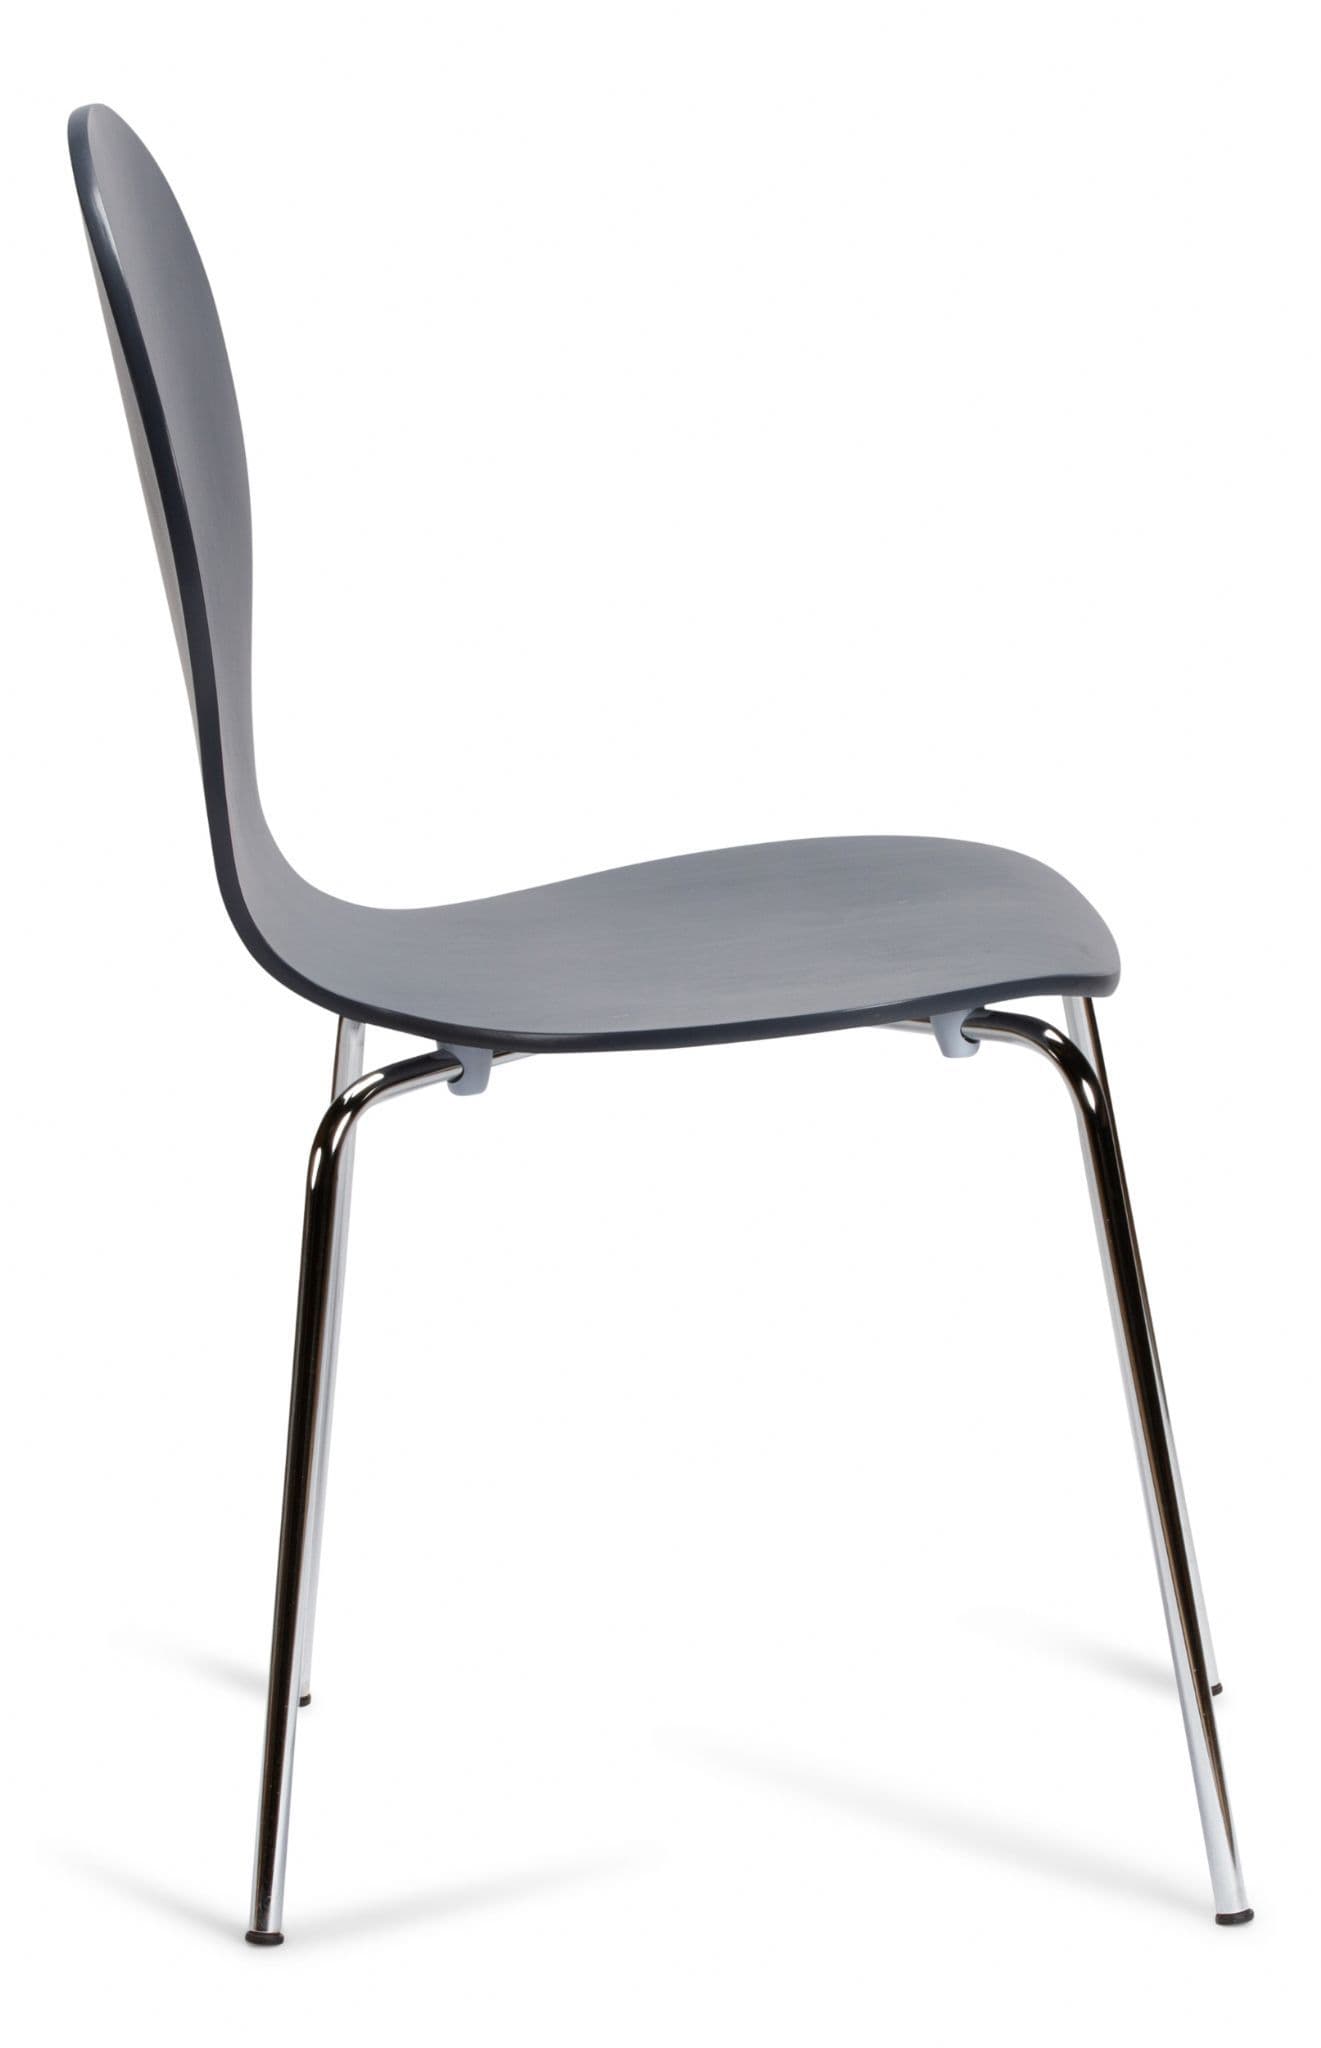 Kimberley Slate Grey & Chrome Dining Chairs Side View